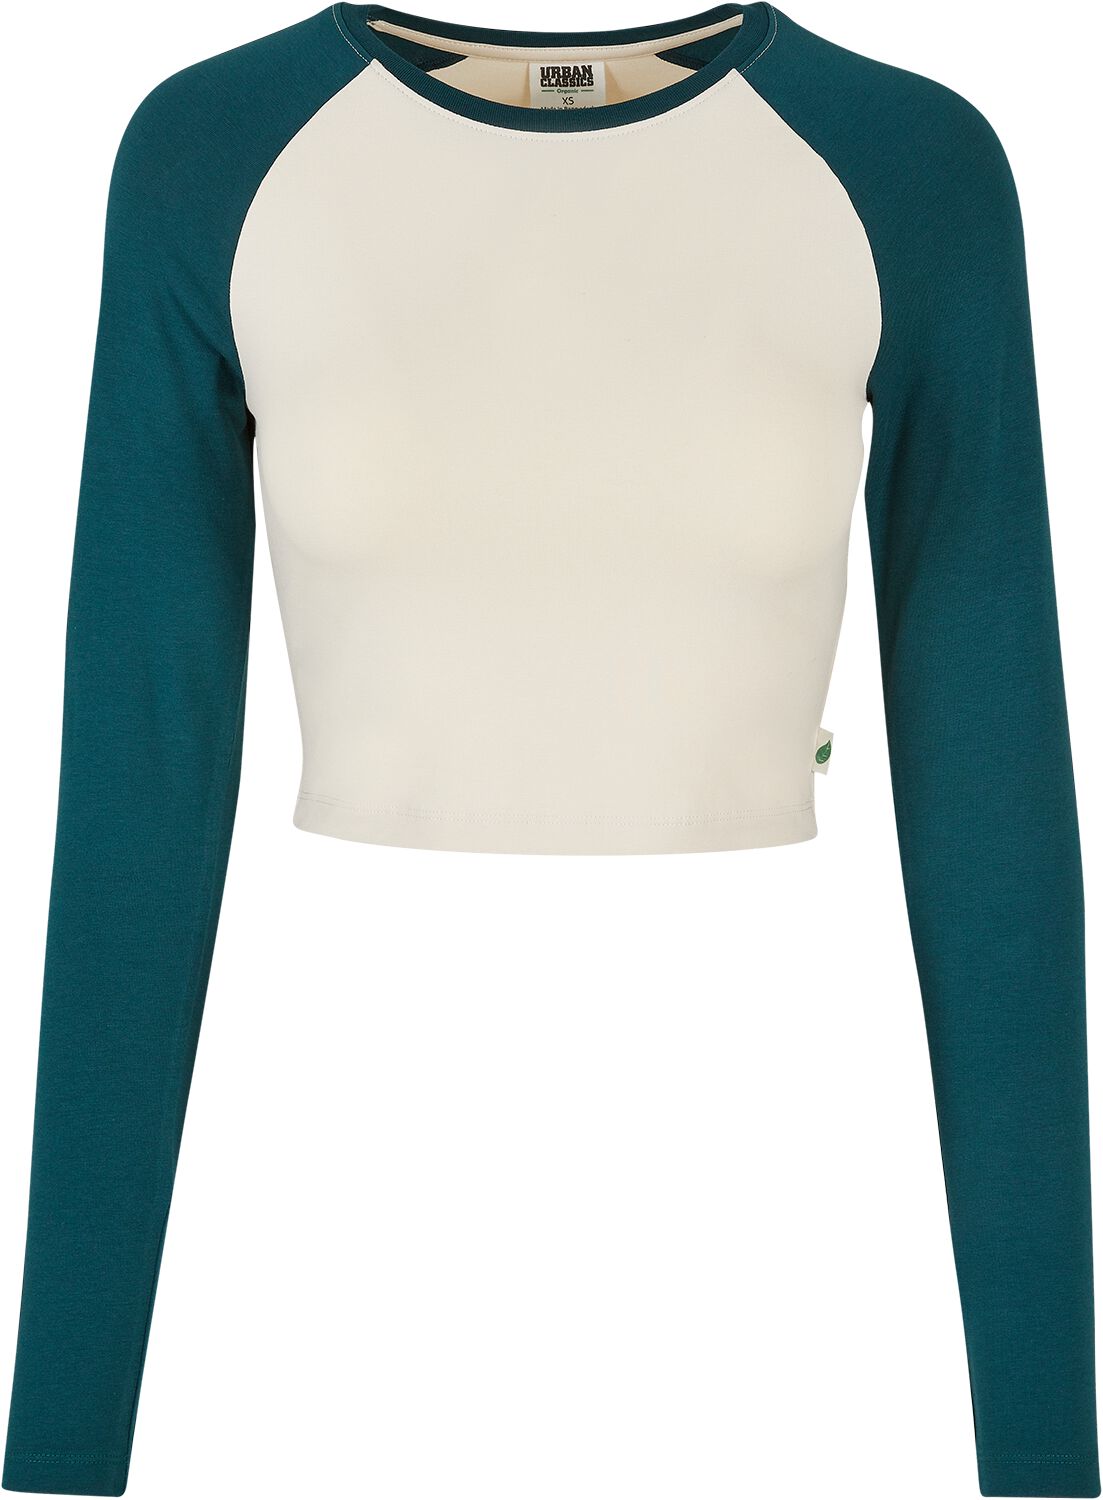 Urban Classics Ladies’ Organic Cropped Retro Long-Sleeved Baseball Top Long-Sleeve Shirt White Green